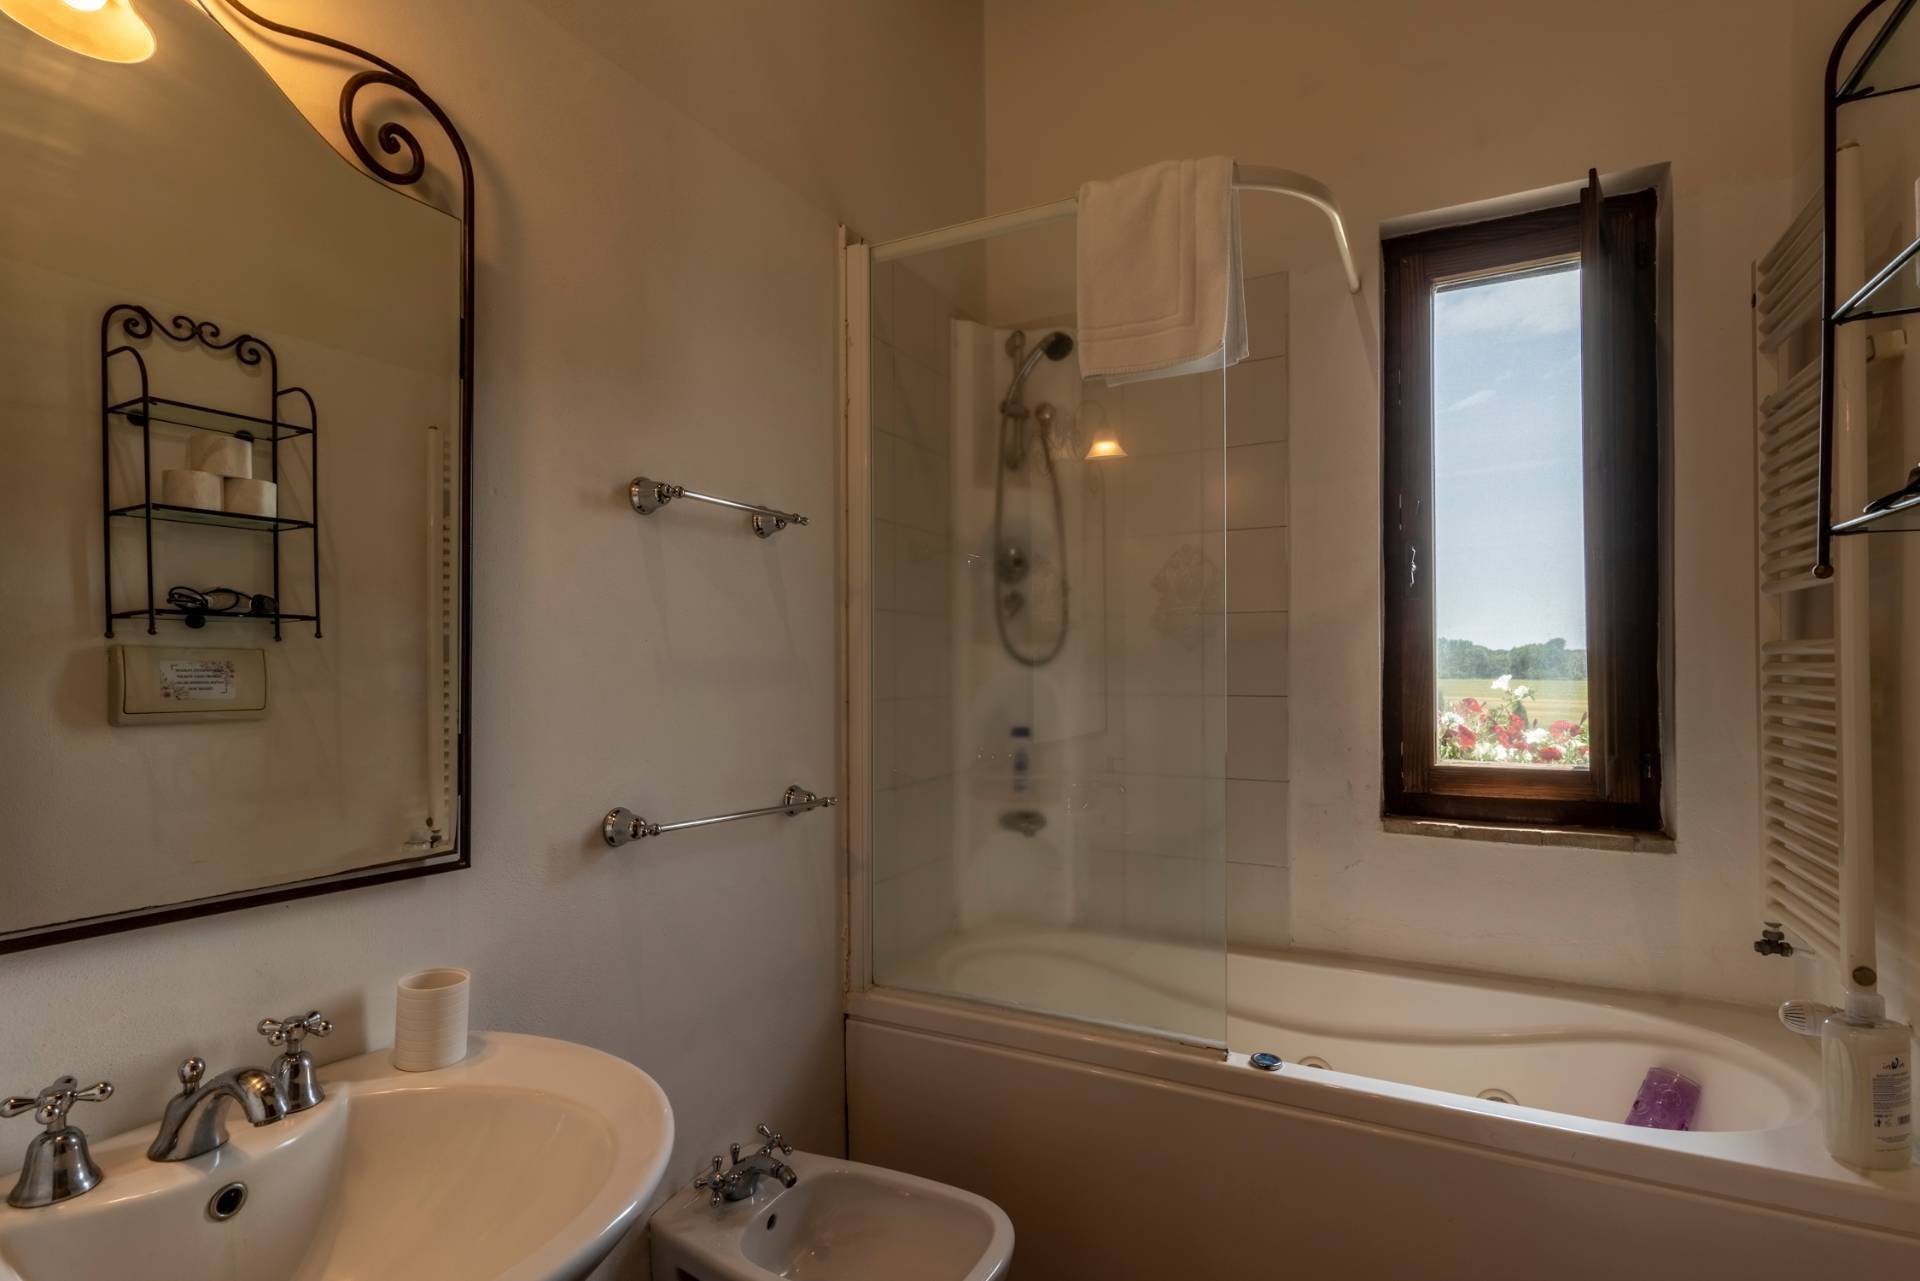 loc podernovo, Monteroni d'Arbia, Siena, 53014, IT, 12 Bedrooms Bedrooms, ,7 BathroomsBathrooms,Residential,For Sale,loc podernovo,1483139